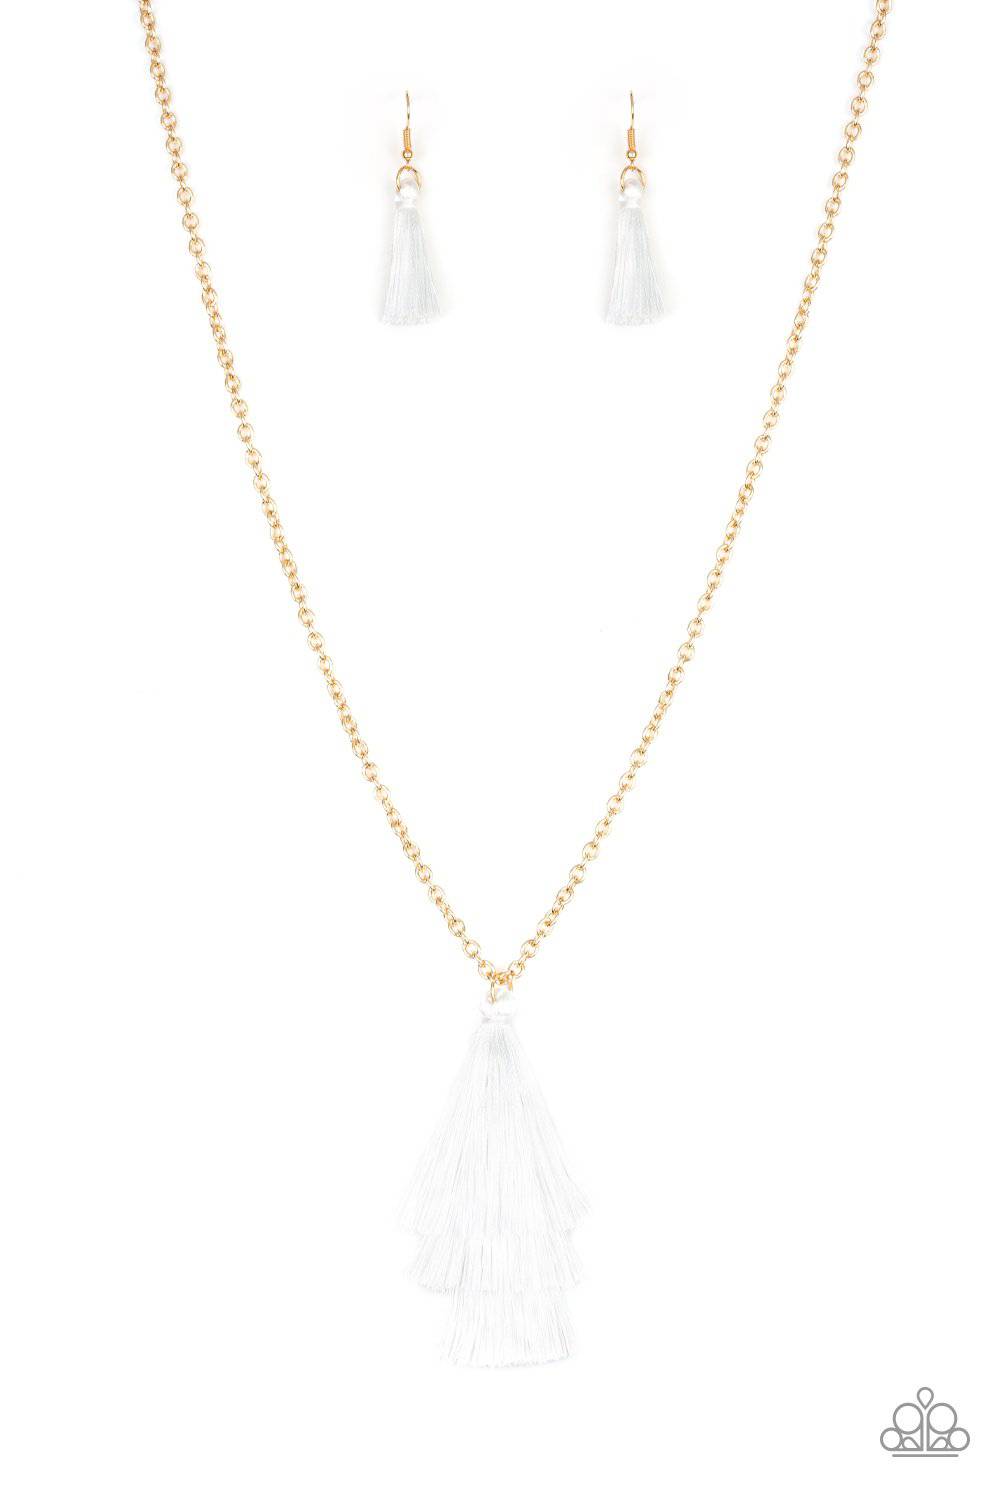 Triple The Tassel - White Tassel Necklace - Paparazzi Accessories - GlaMarous Titi Jewels